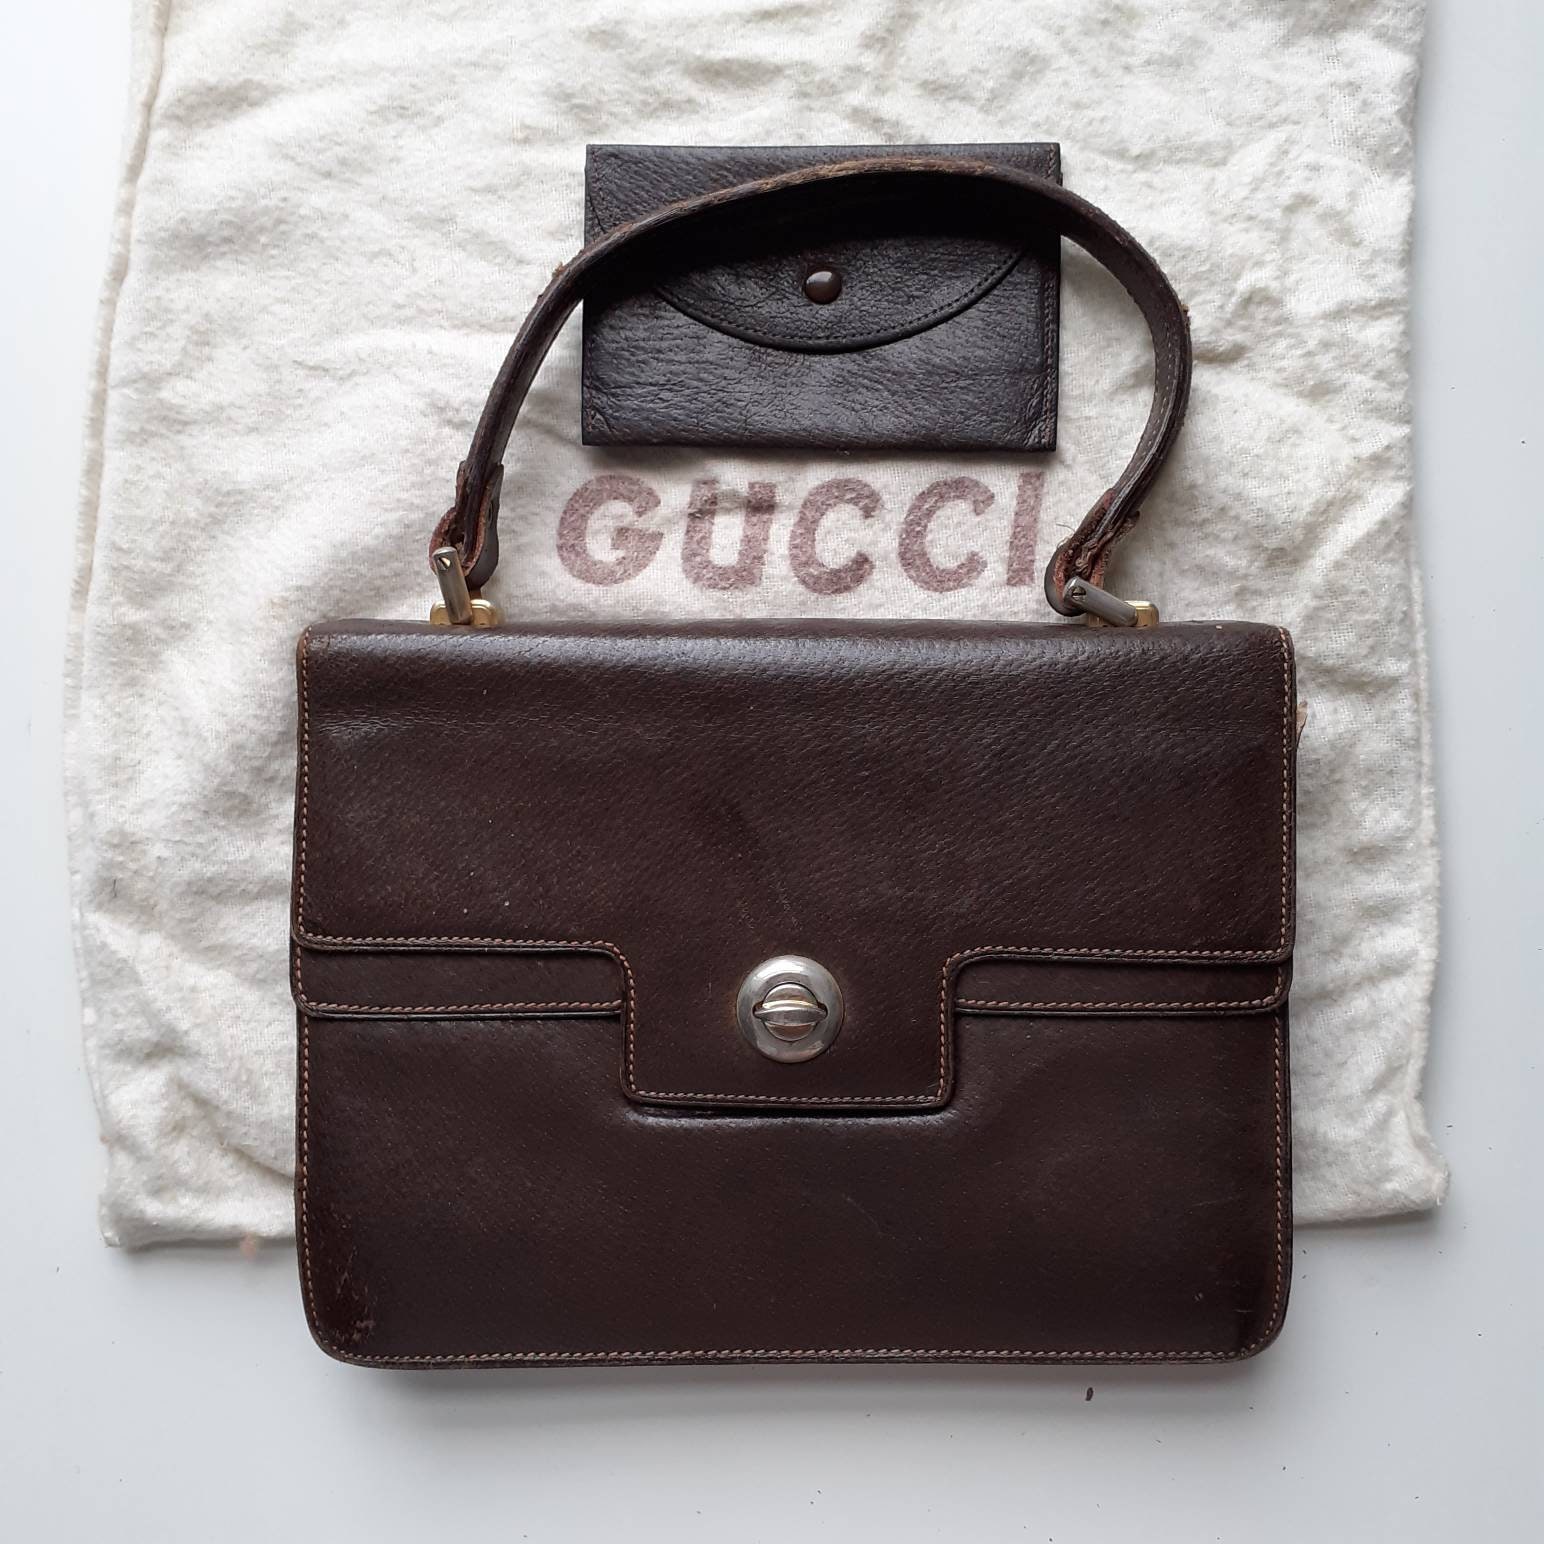 1950s Gucci - 22 For Sale on 1stDibs  1950s gucci bag, rare vintage  vintage gucci bags 1950, 1950 gucci